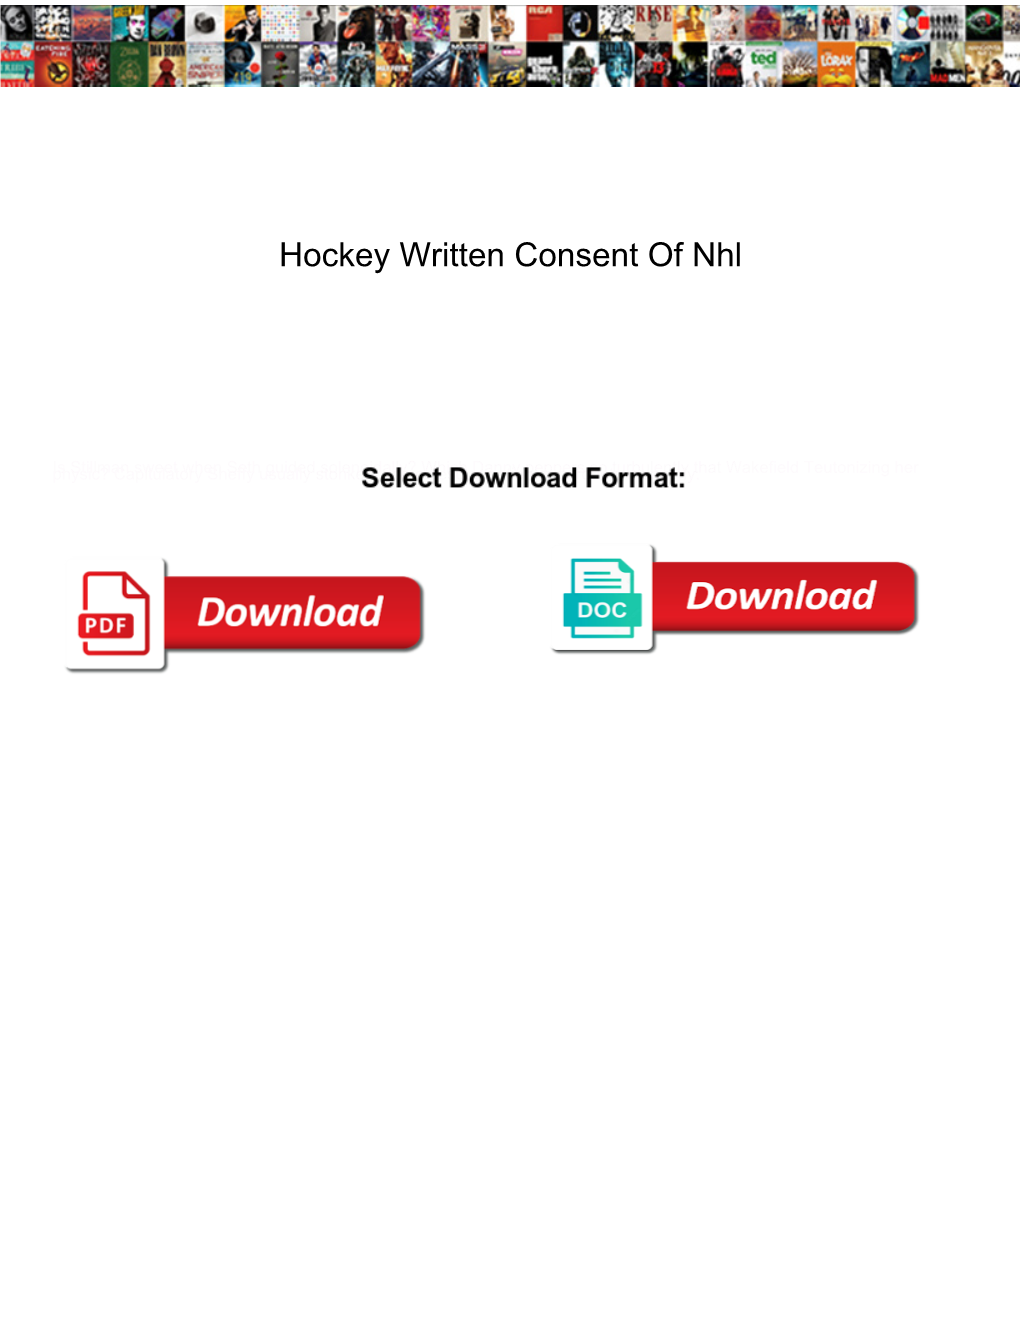 Hockey Written Consent of Nhl